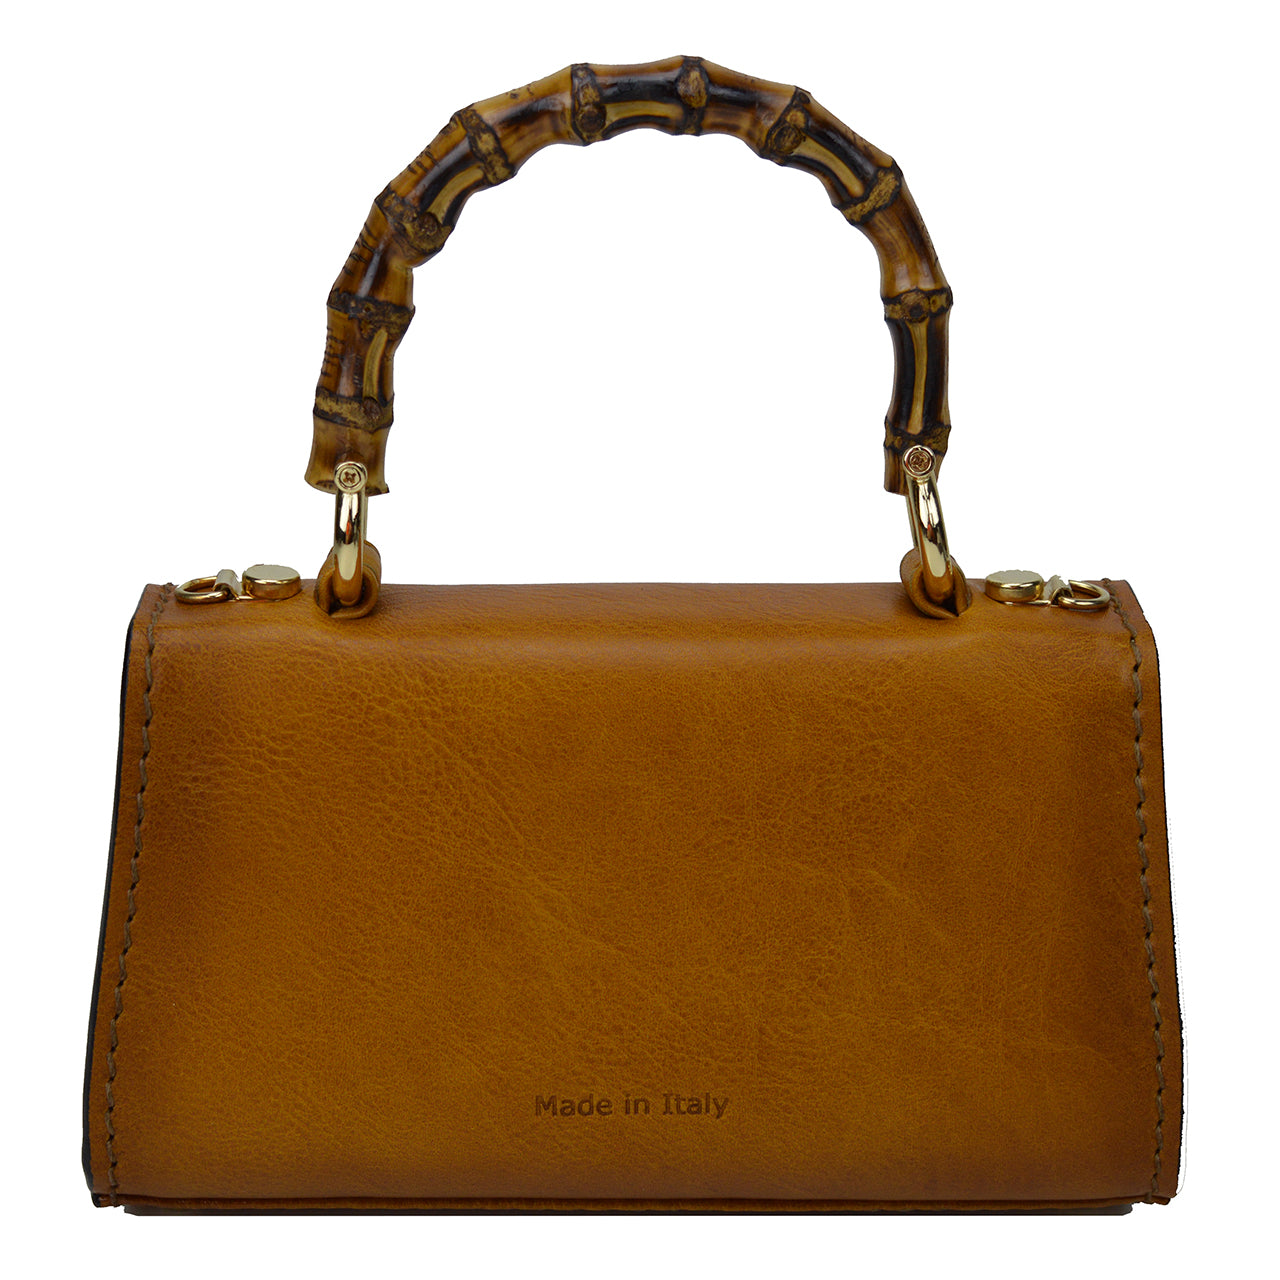 Pratesi Castalia Lady Bag in genuine Italian leather - Castalia Brown